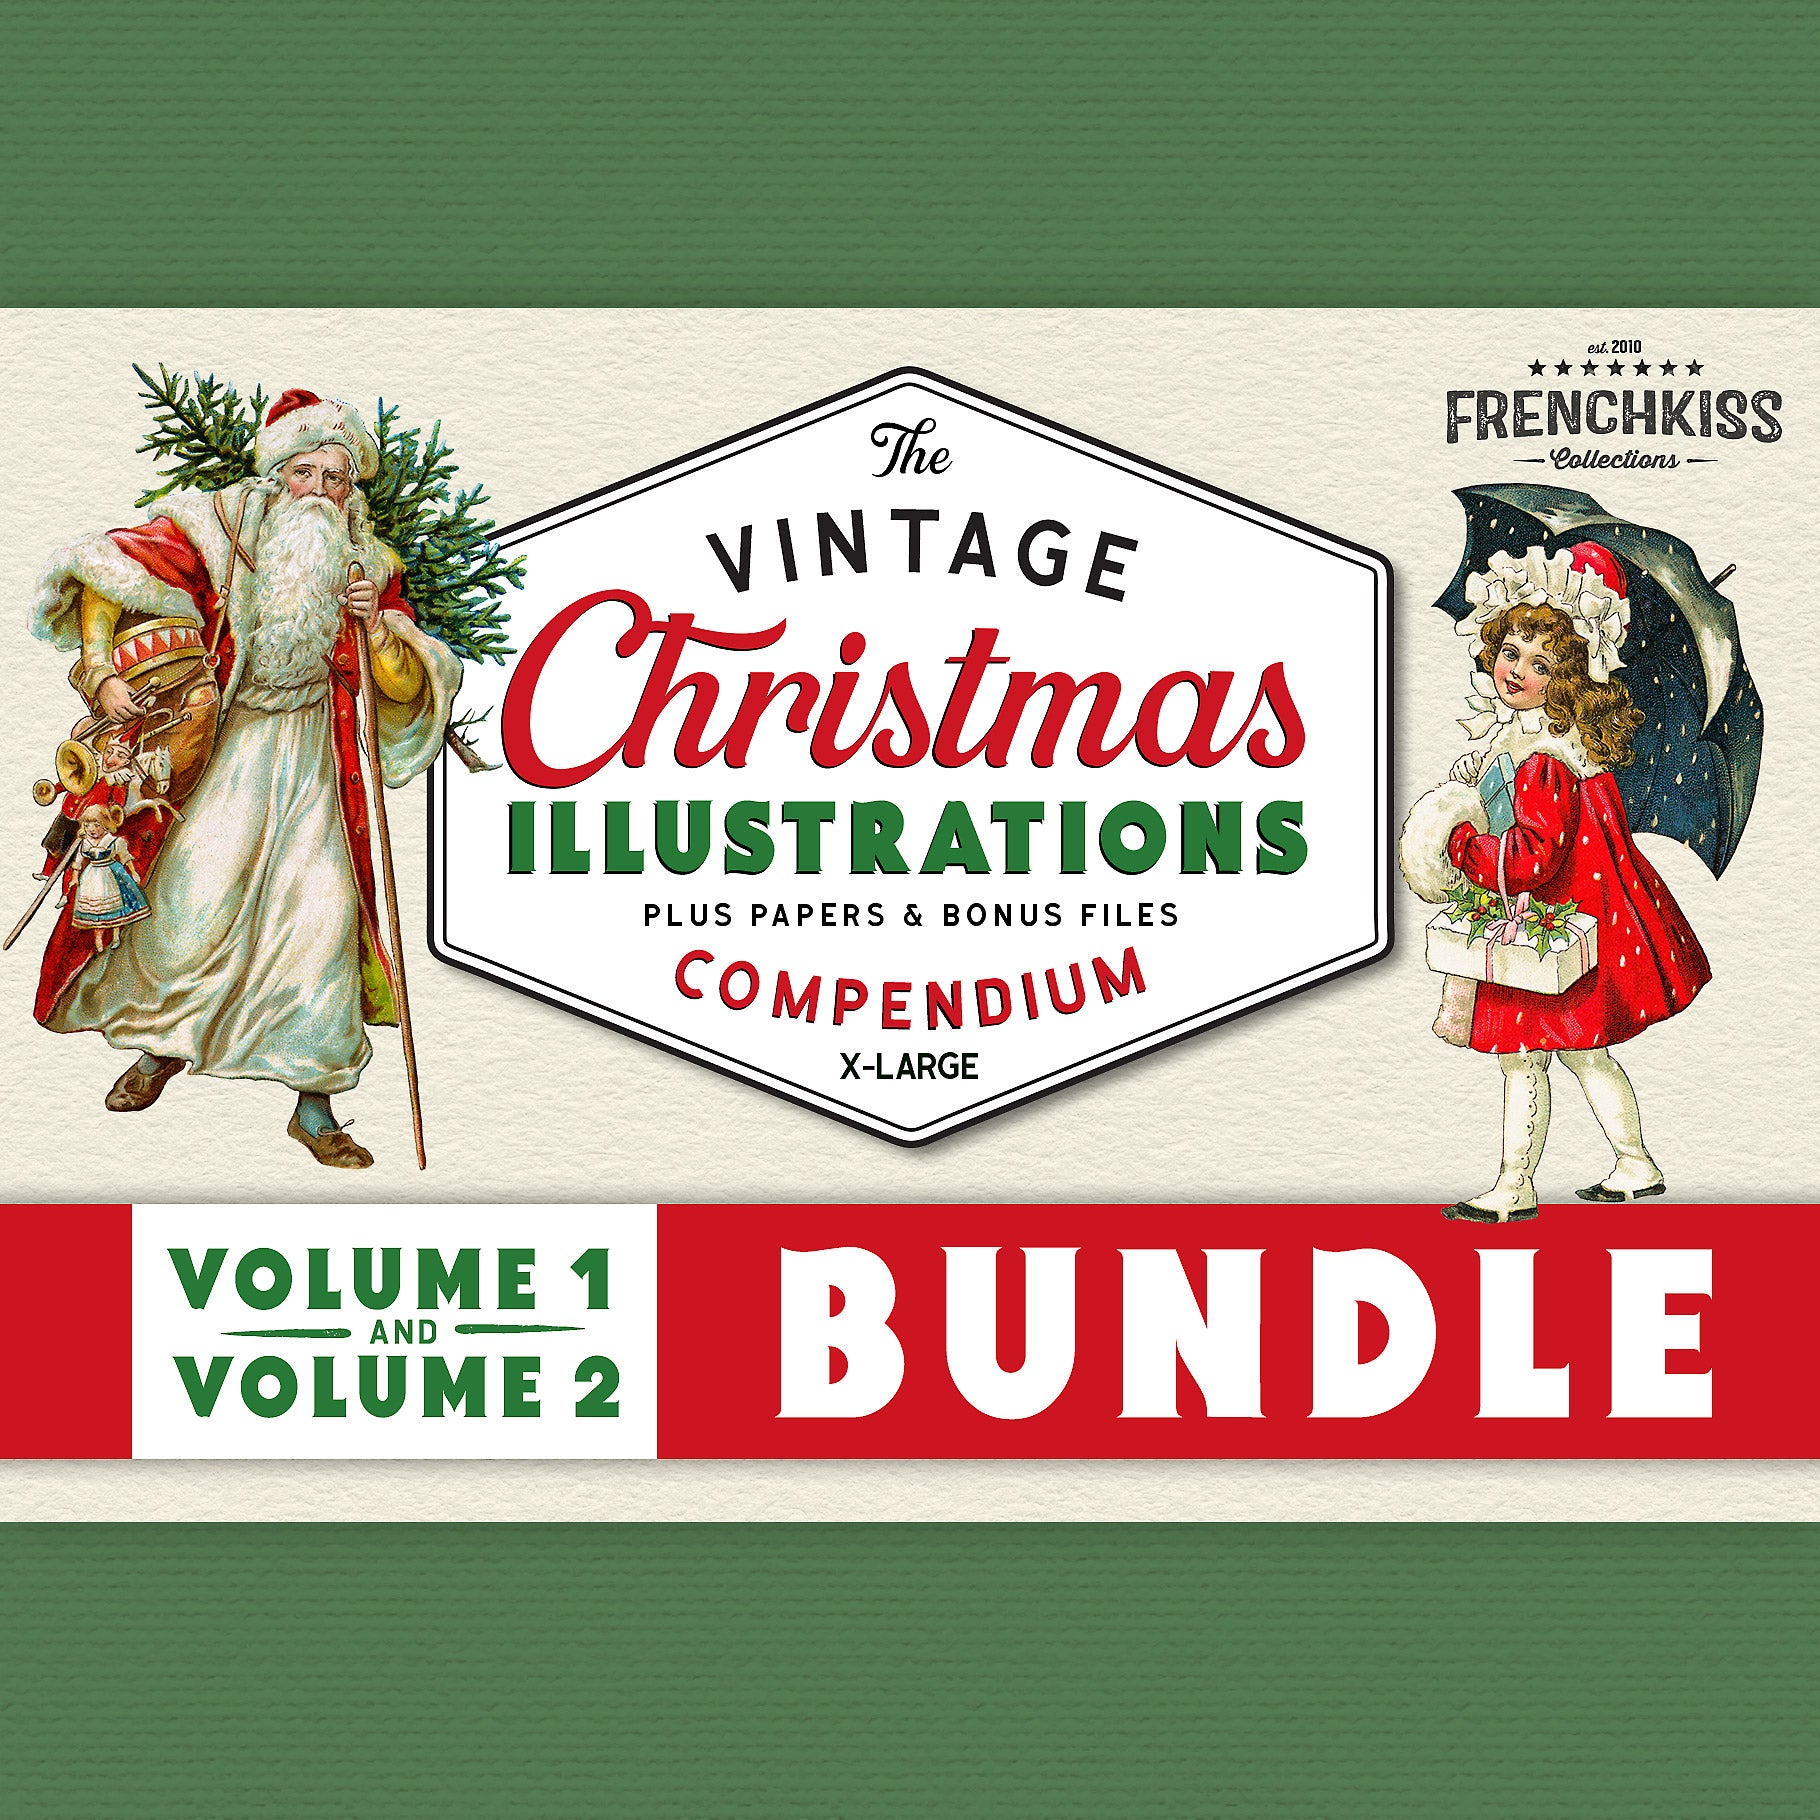 The Vintage Christmas Illustrations Compendium Bundle.